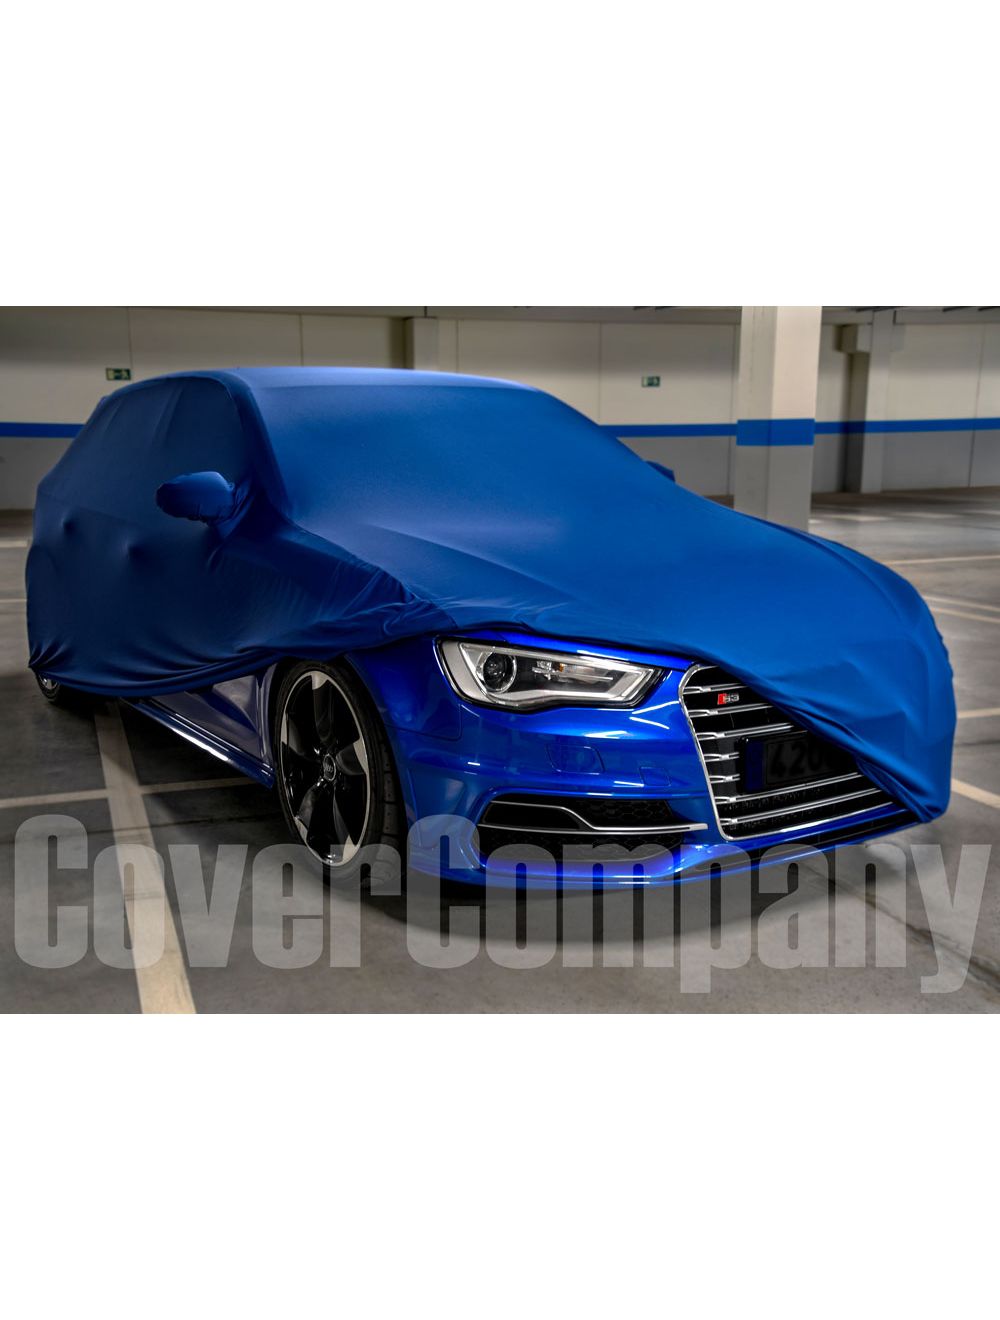 Housse voiture pour Audi S3 8V Sportback,Housse voiture Anti UV